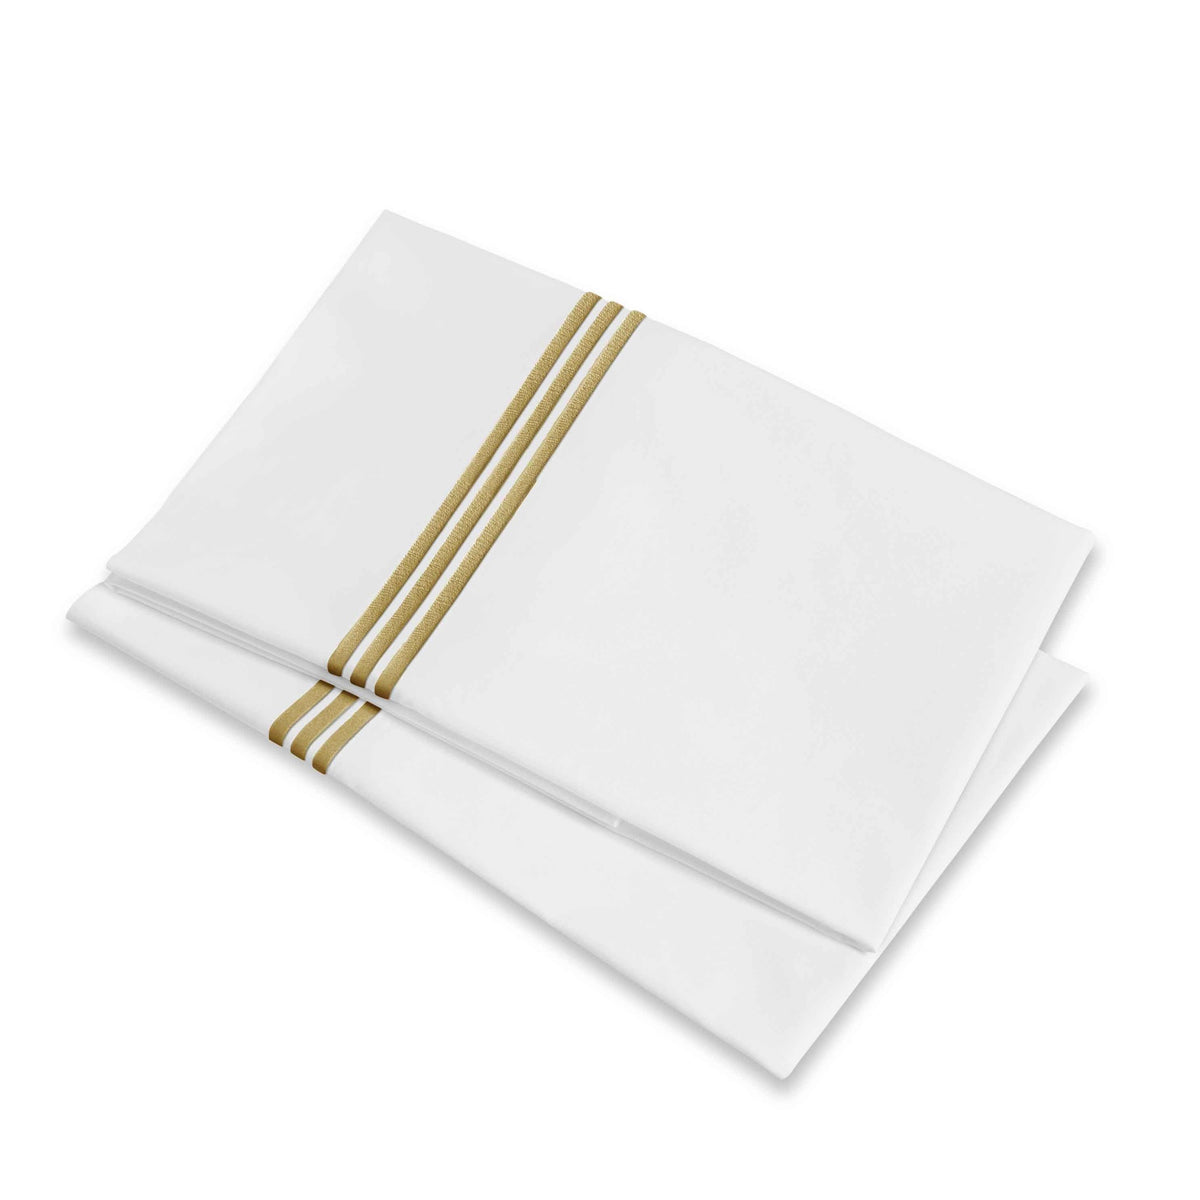 Folded Pillowcases of Signoria Platinum Percale Bedding in White/Caramel Color